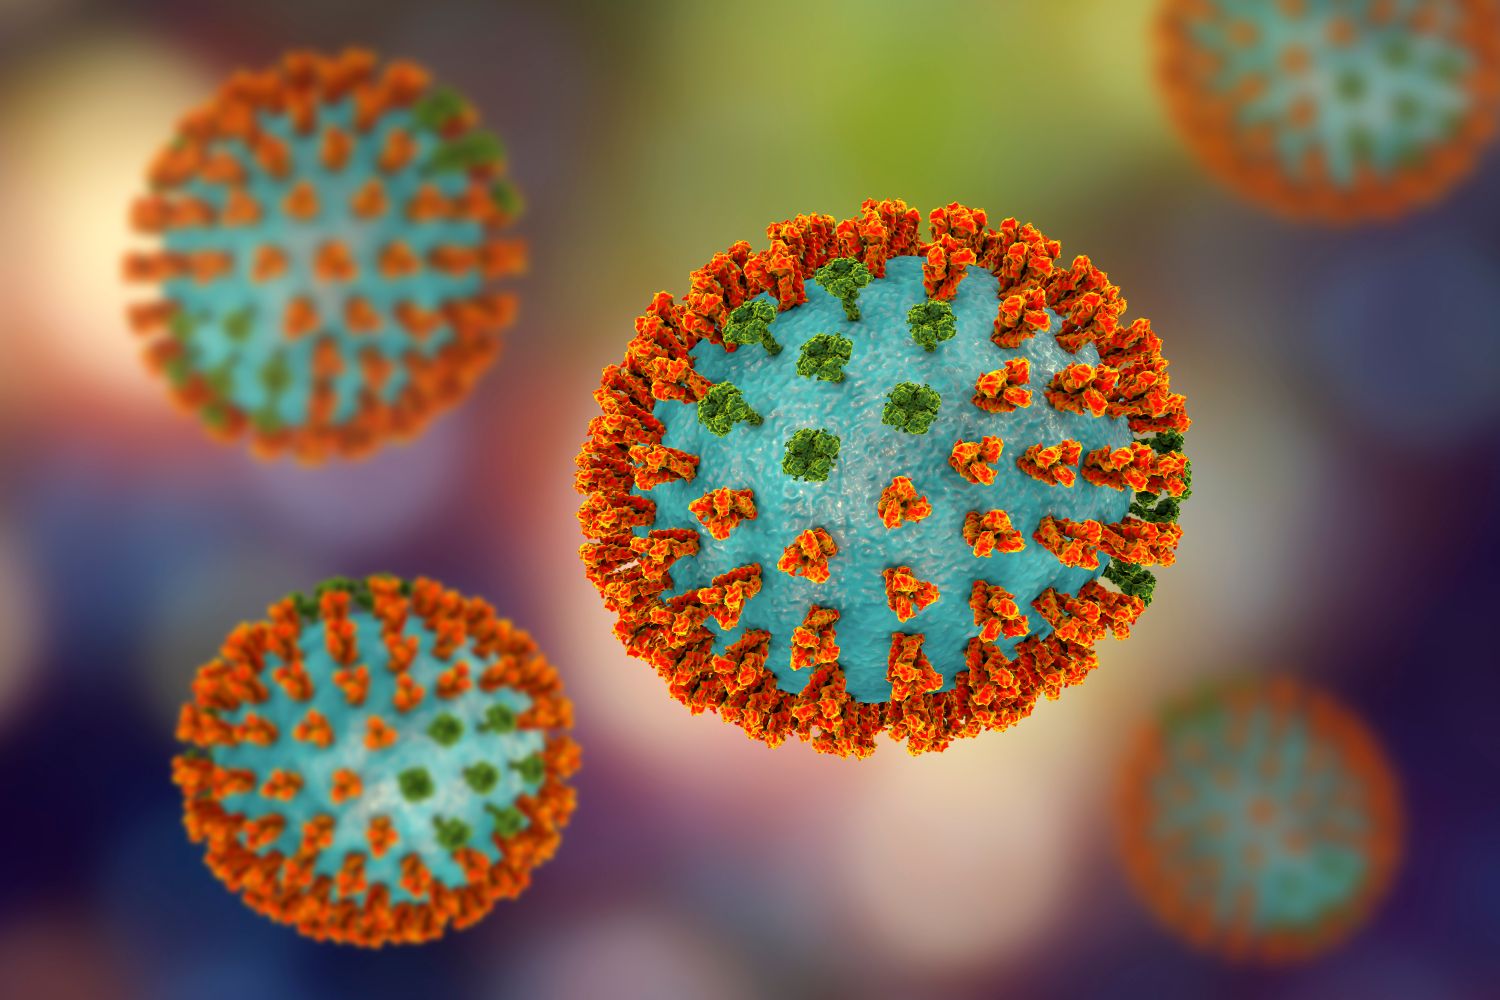 La irrupción del coronavirus 2 ha ido desplazando a algunas cepas de la gripe. Foto: SHUTTERSTOCK. 